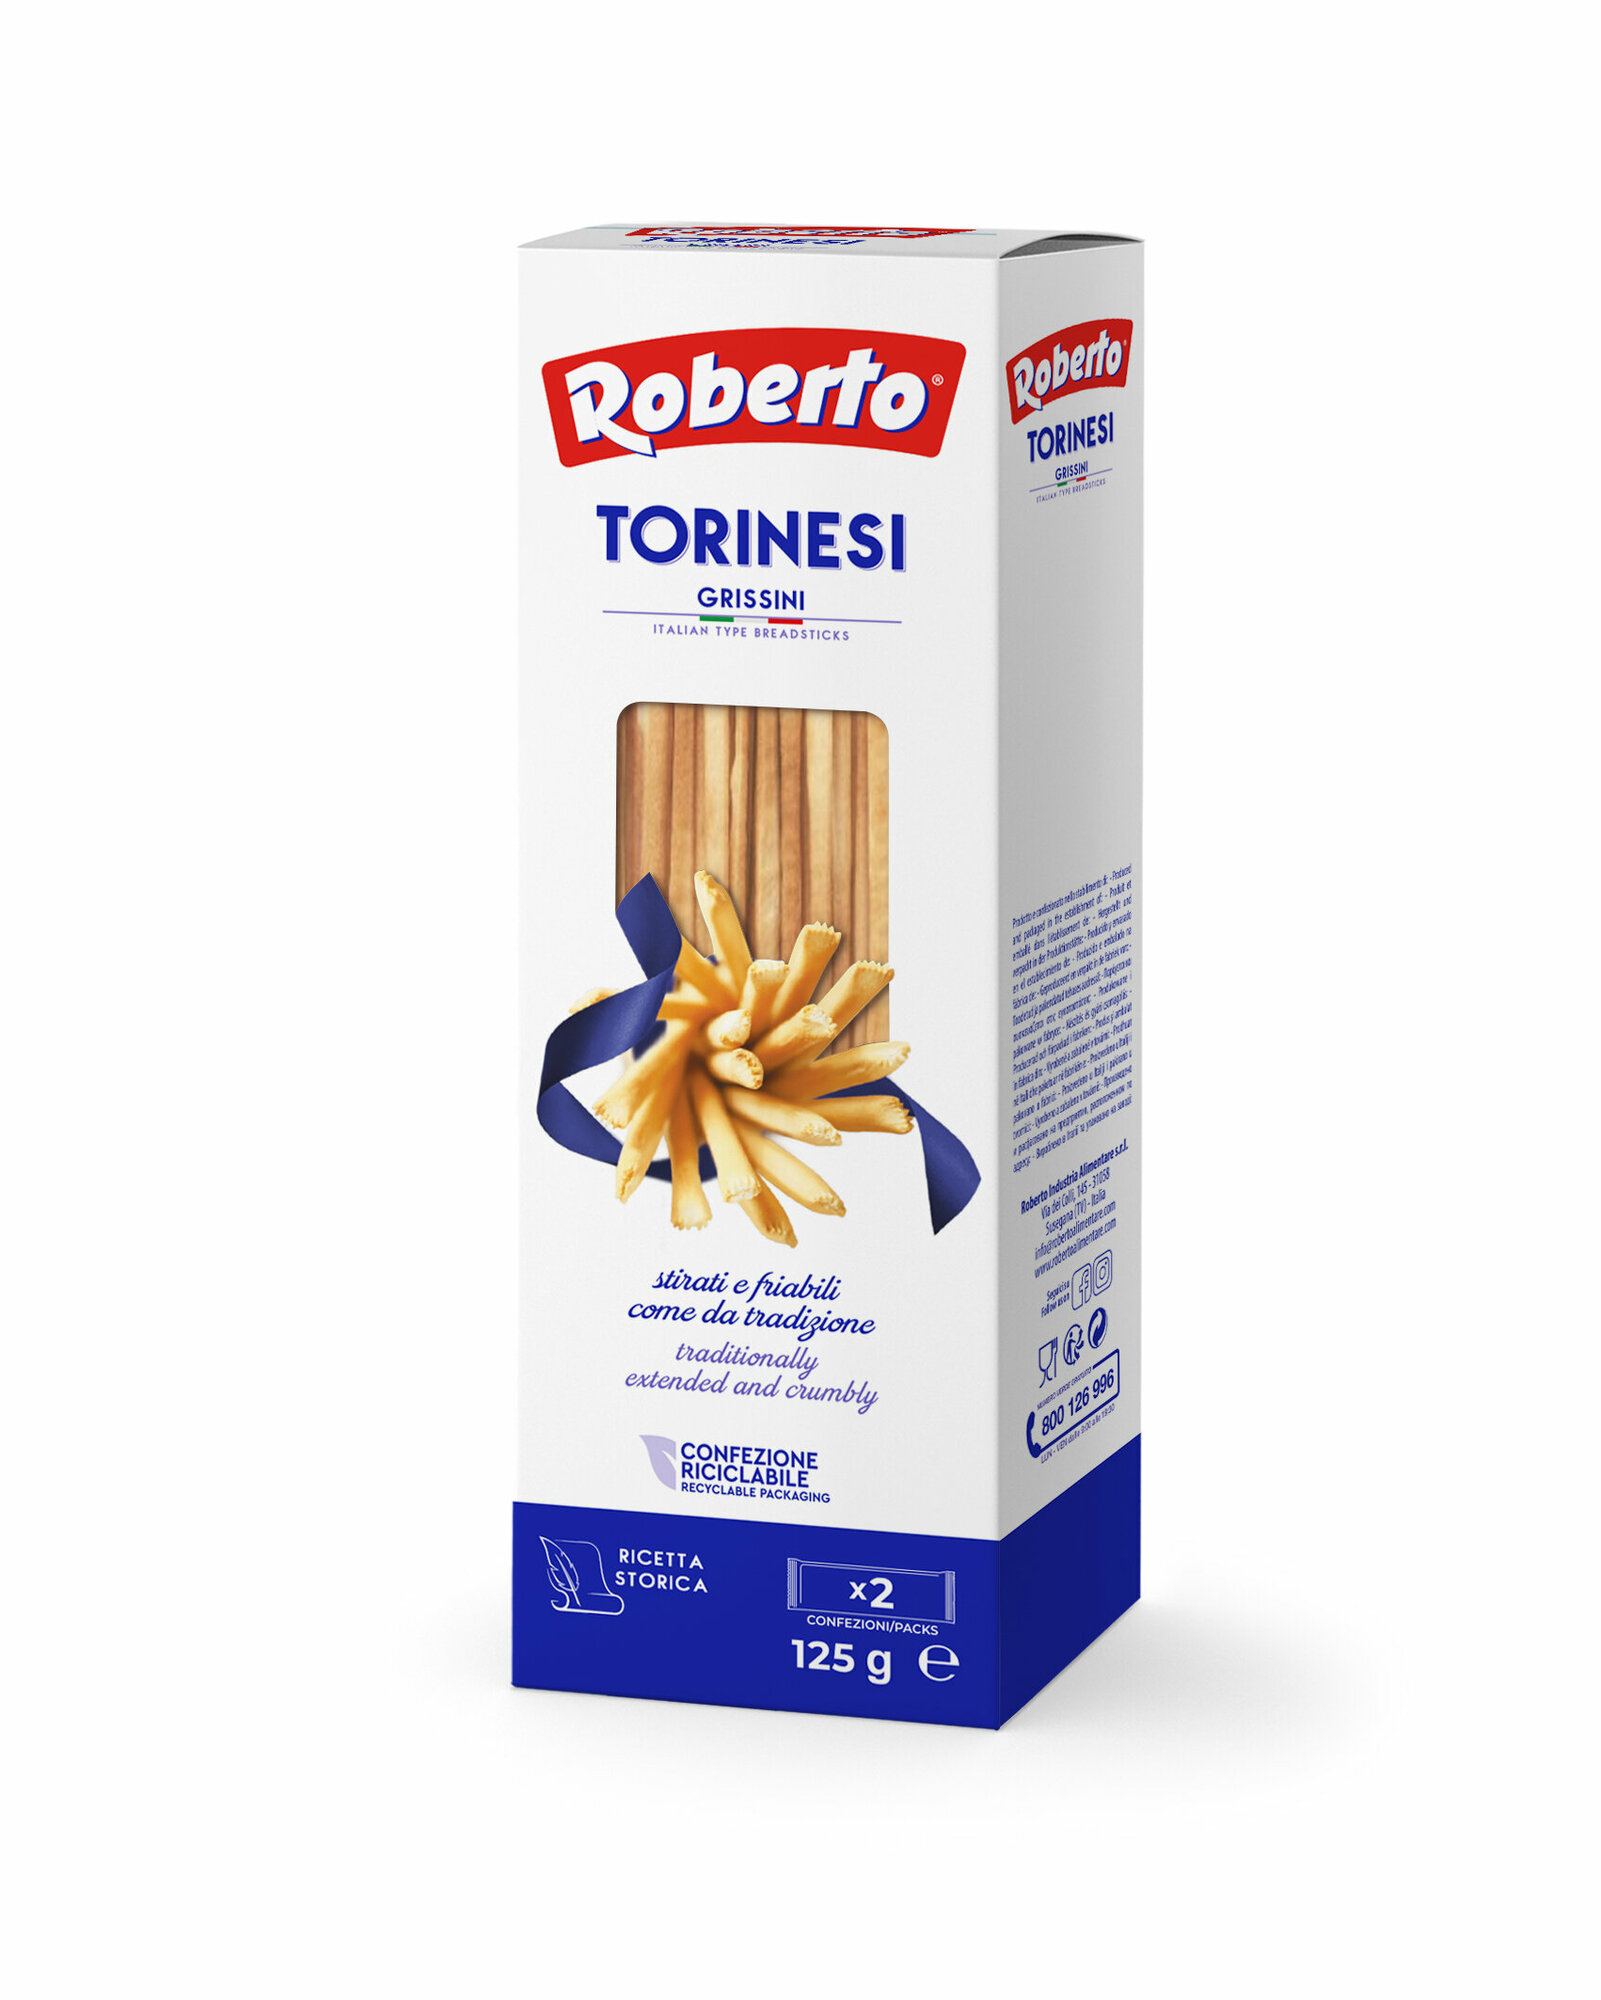 Хлебные палочки Торинези Roberto, 125 г